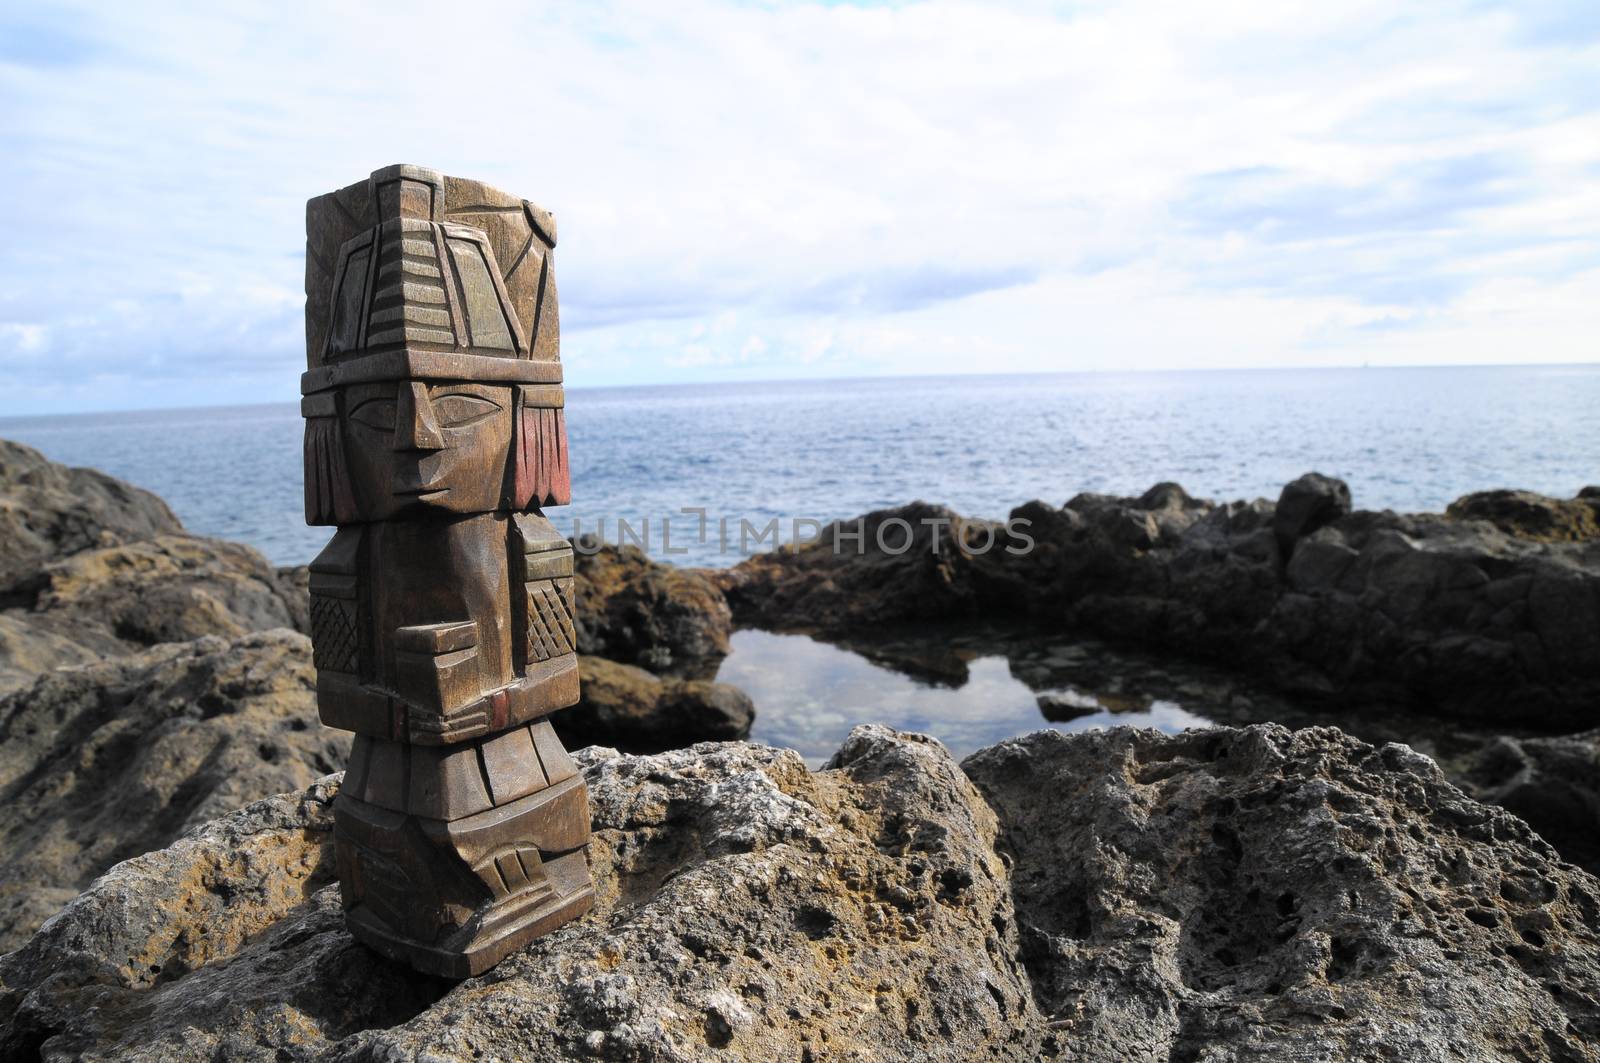 Ancient Maya Statue on the Rocks near the Ocean